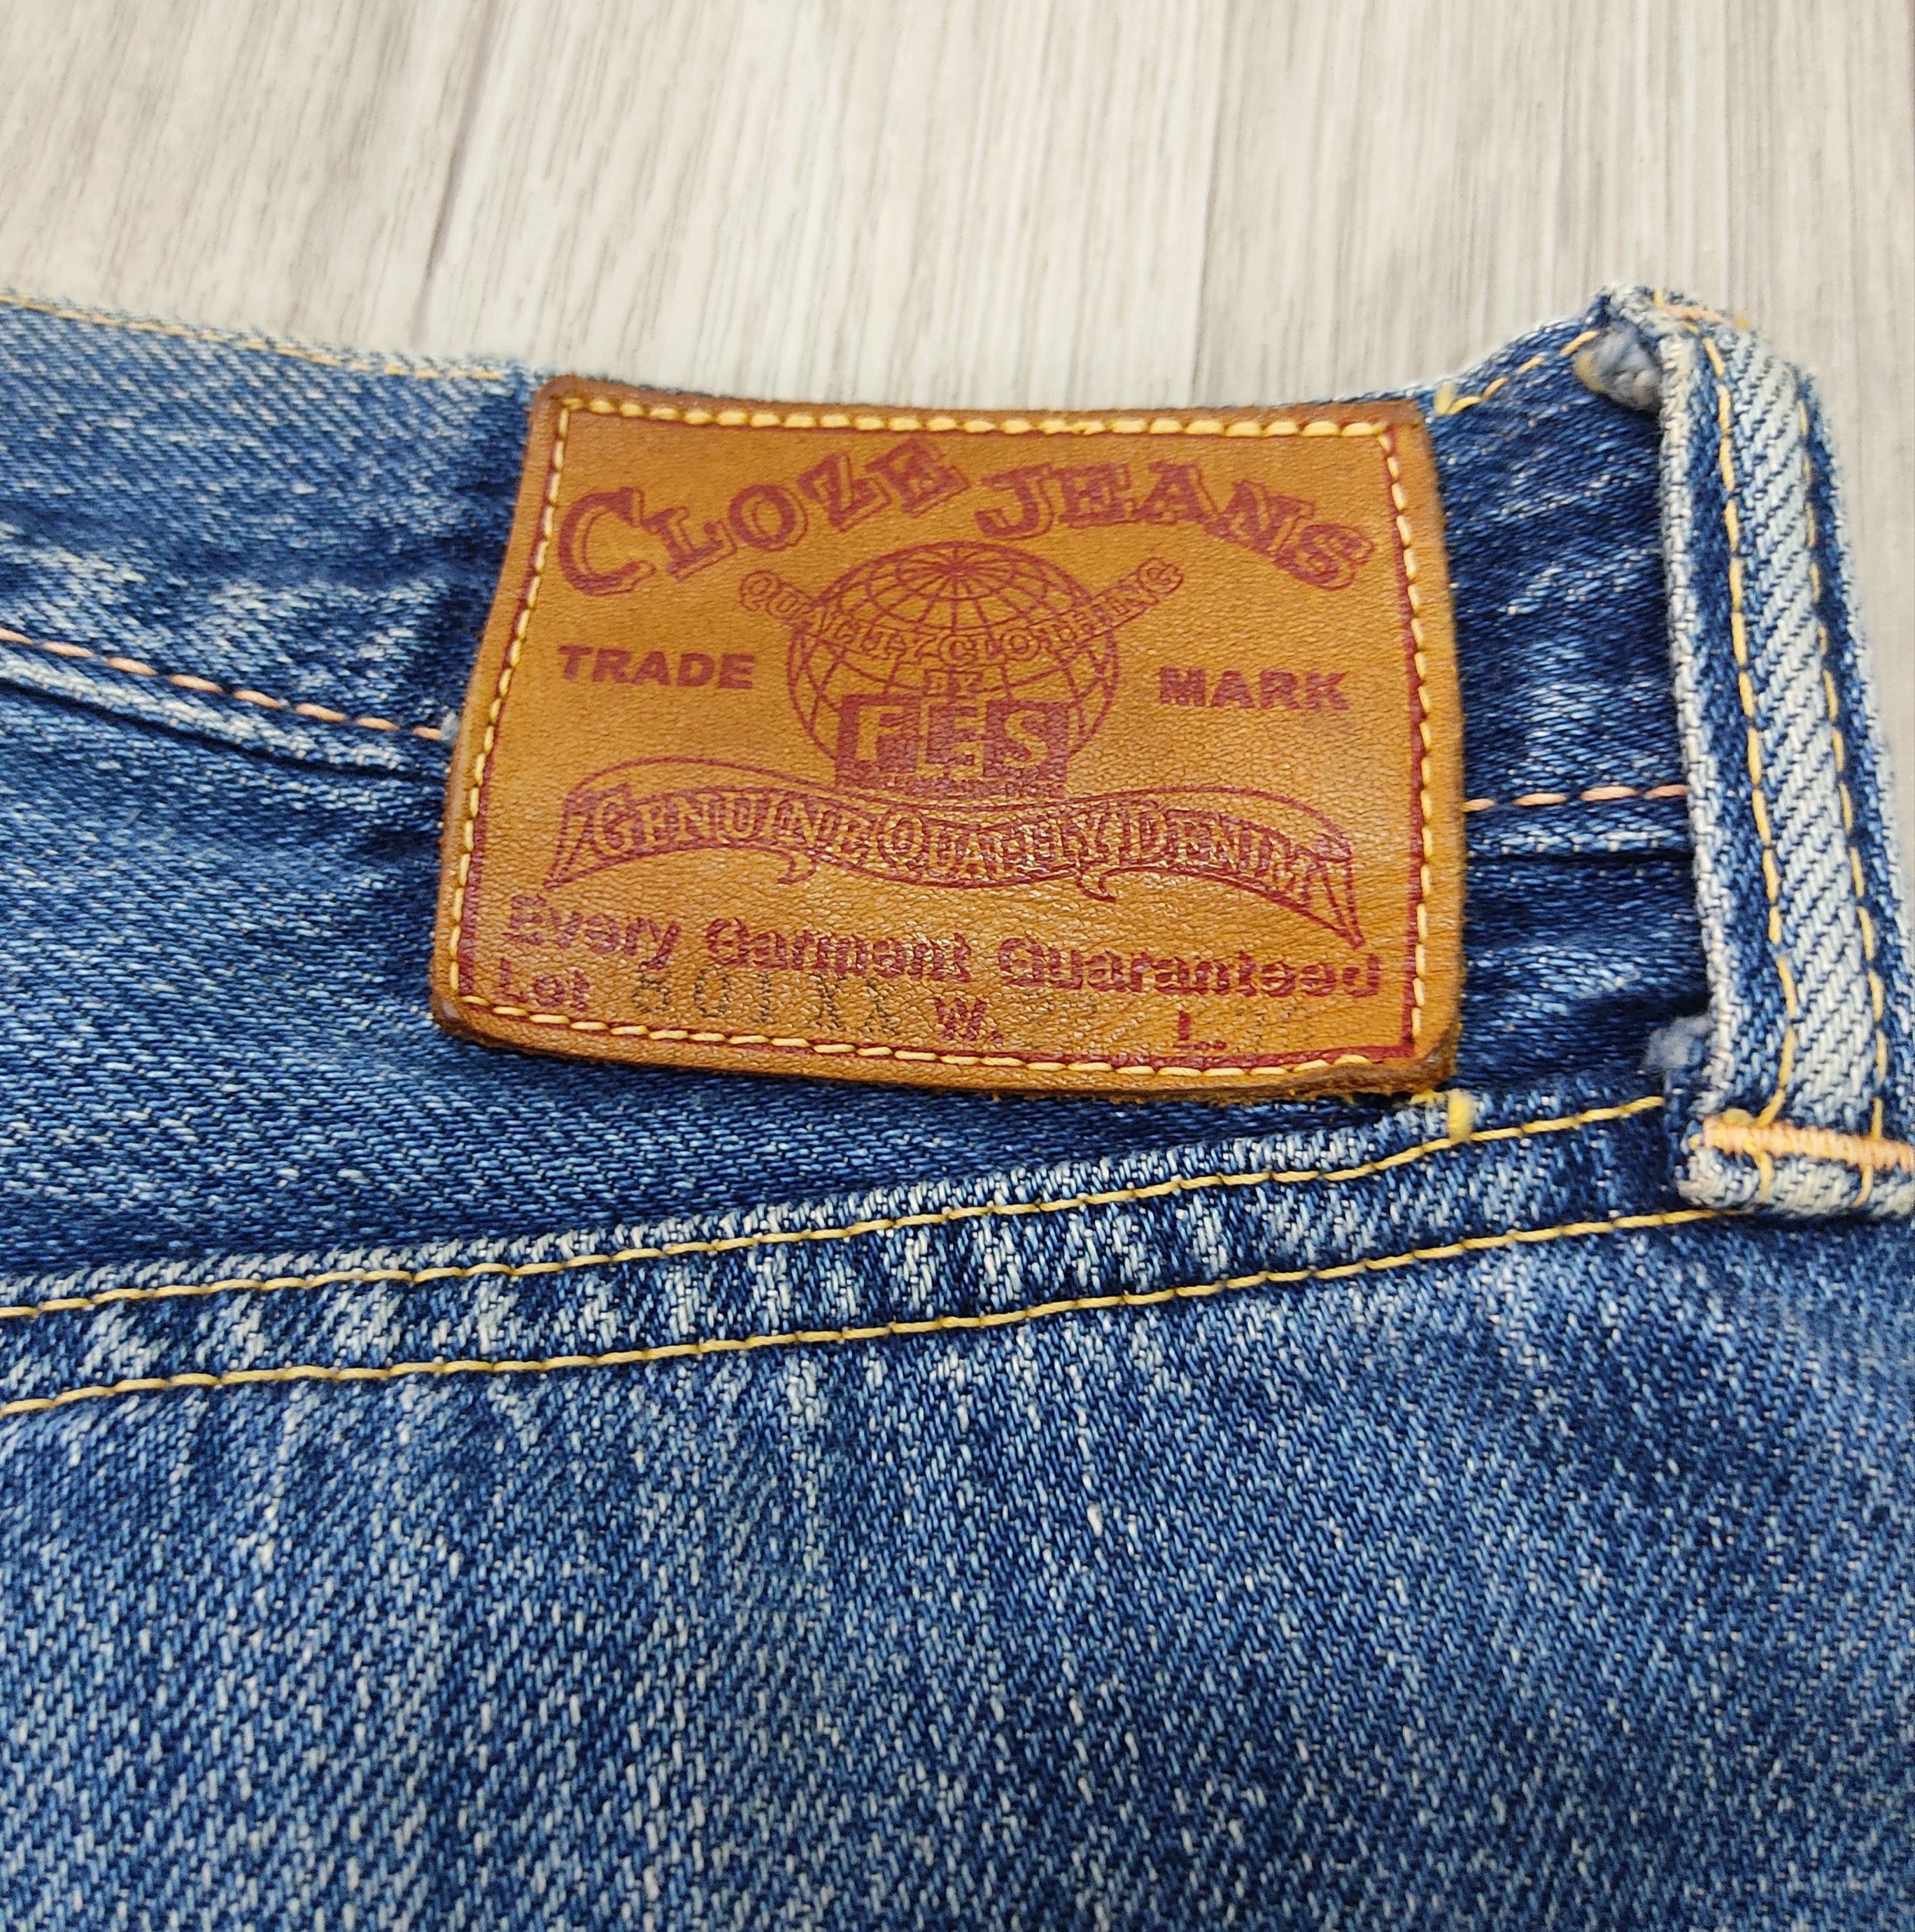 Vintage Cloze Jeans Japanese Selvedge Denim Pants - 12